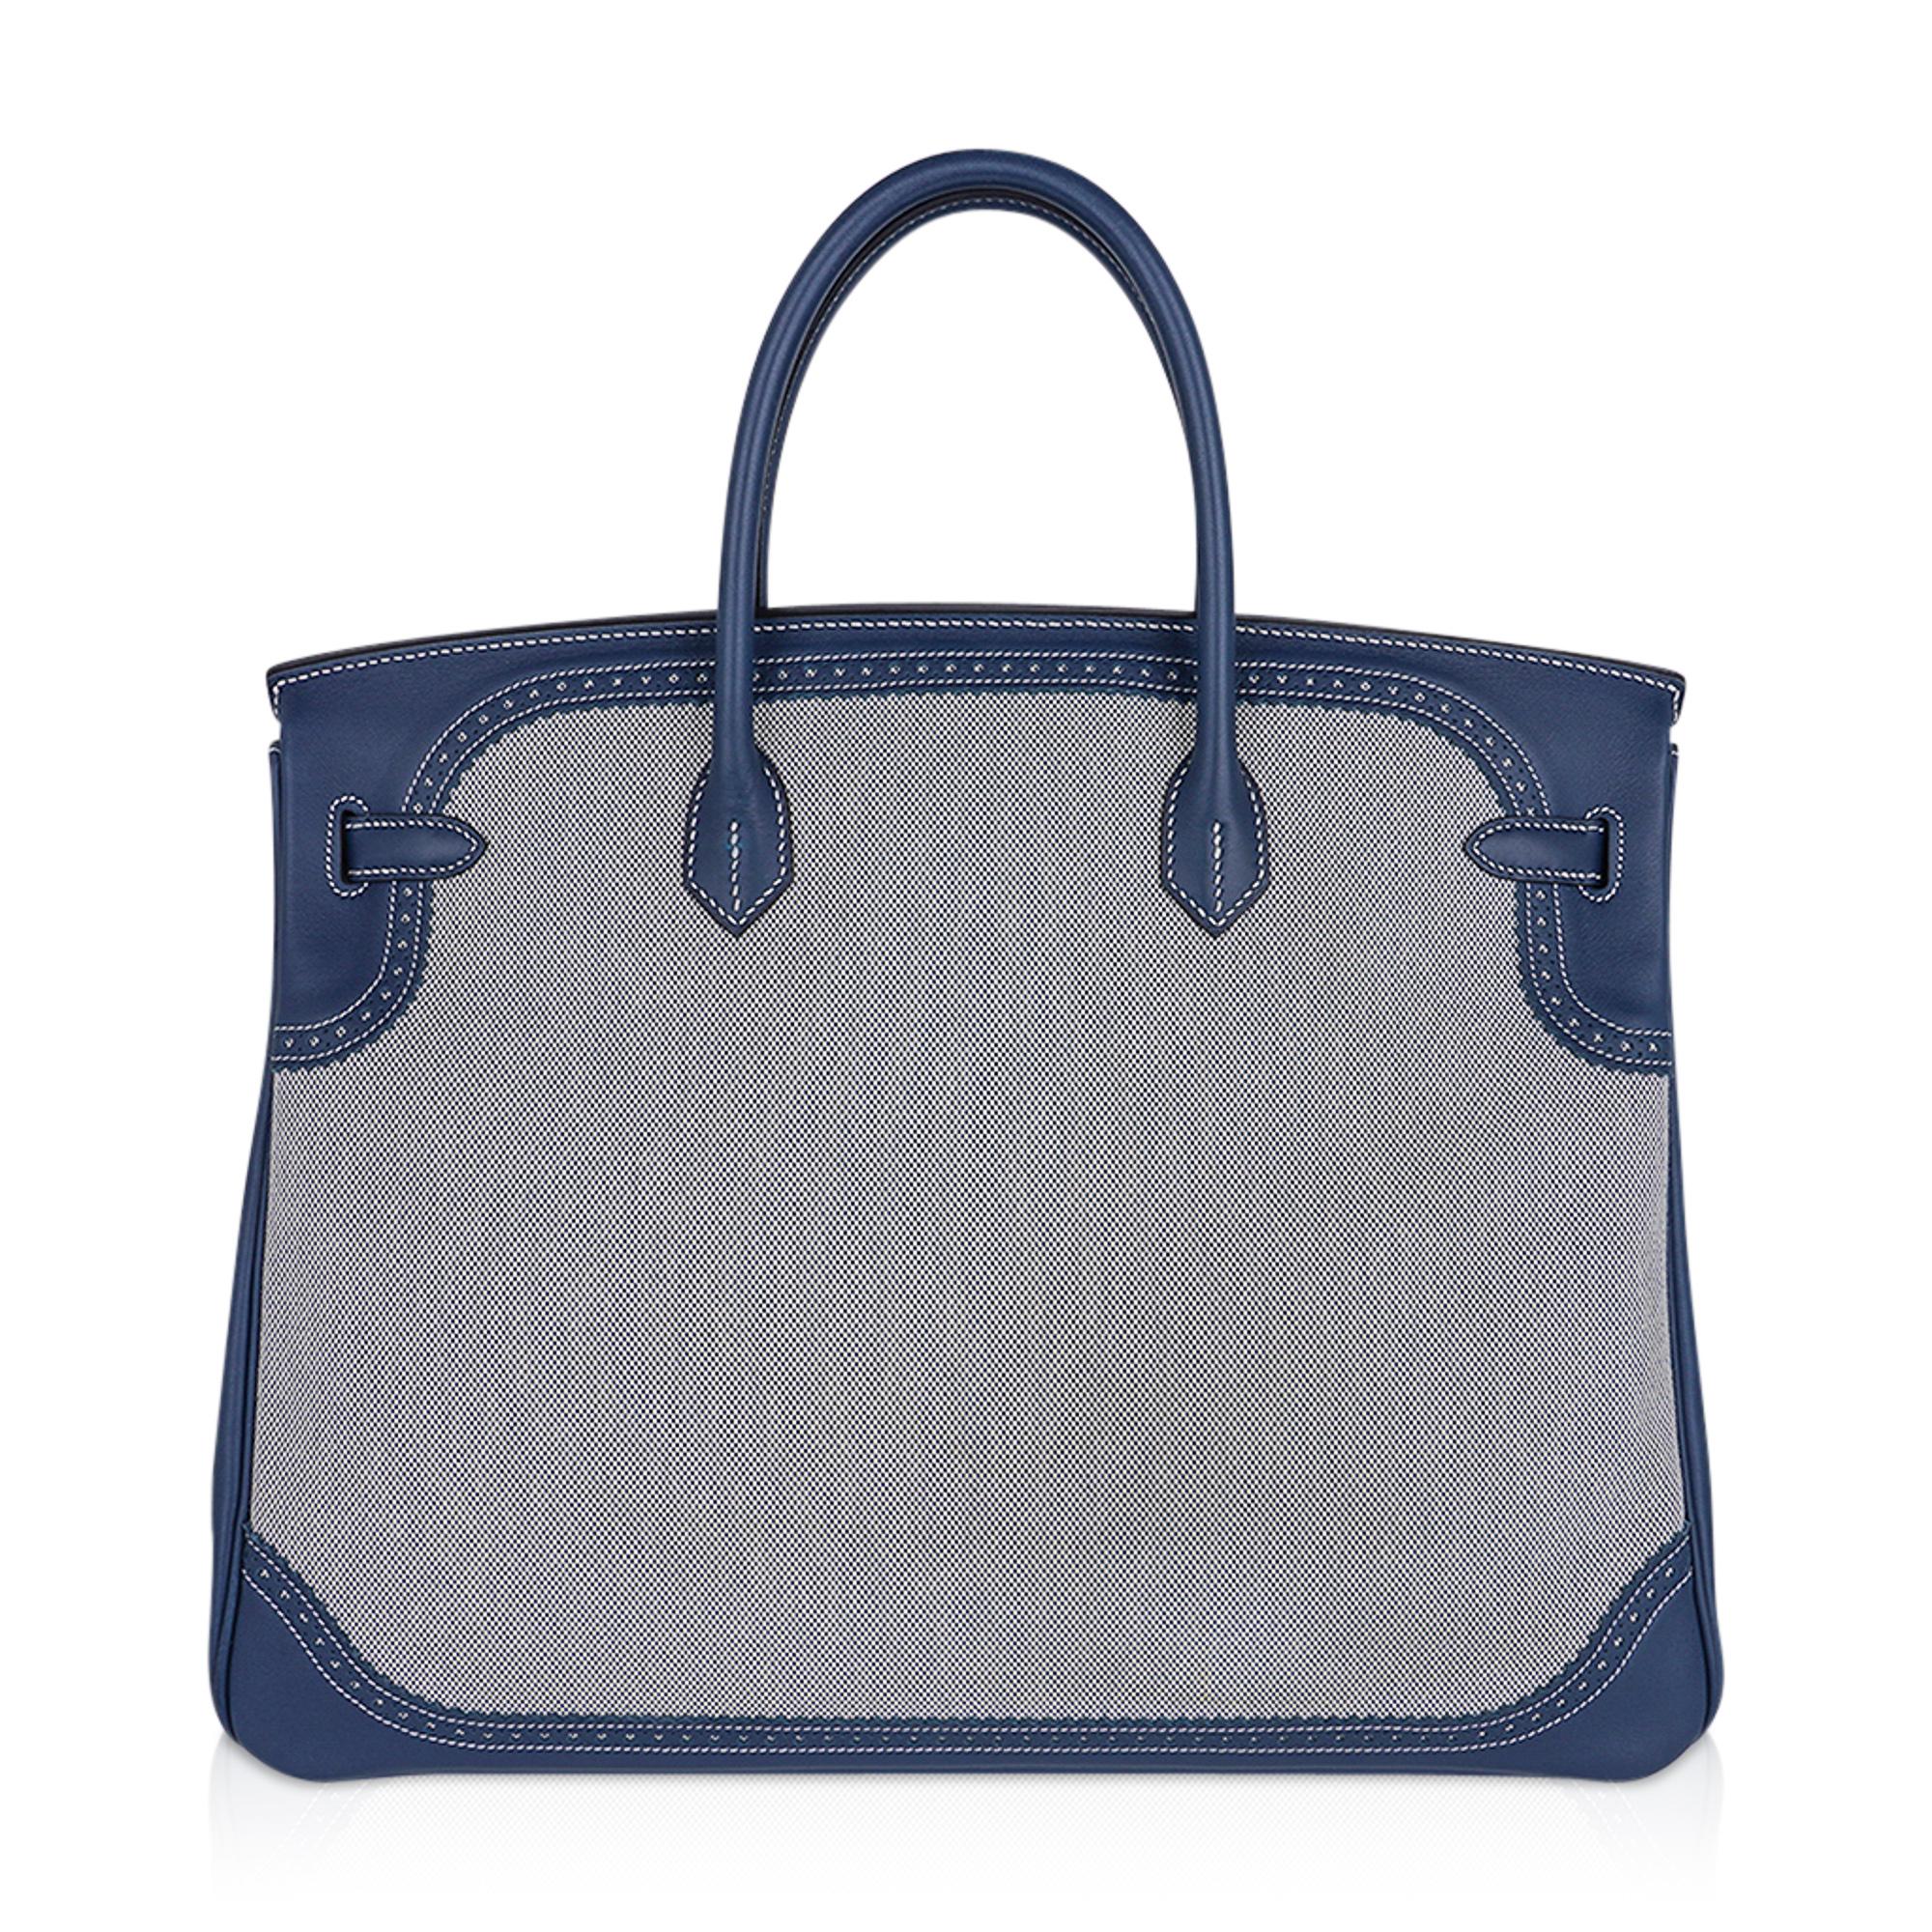 Hermes Birkin 40 Ghillies Blue de Prusse w/ Blue Toile Bag Limited Edition For Sale 1